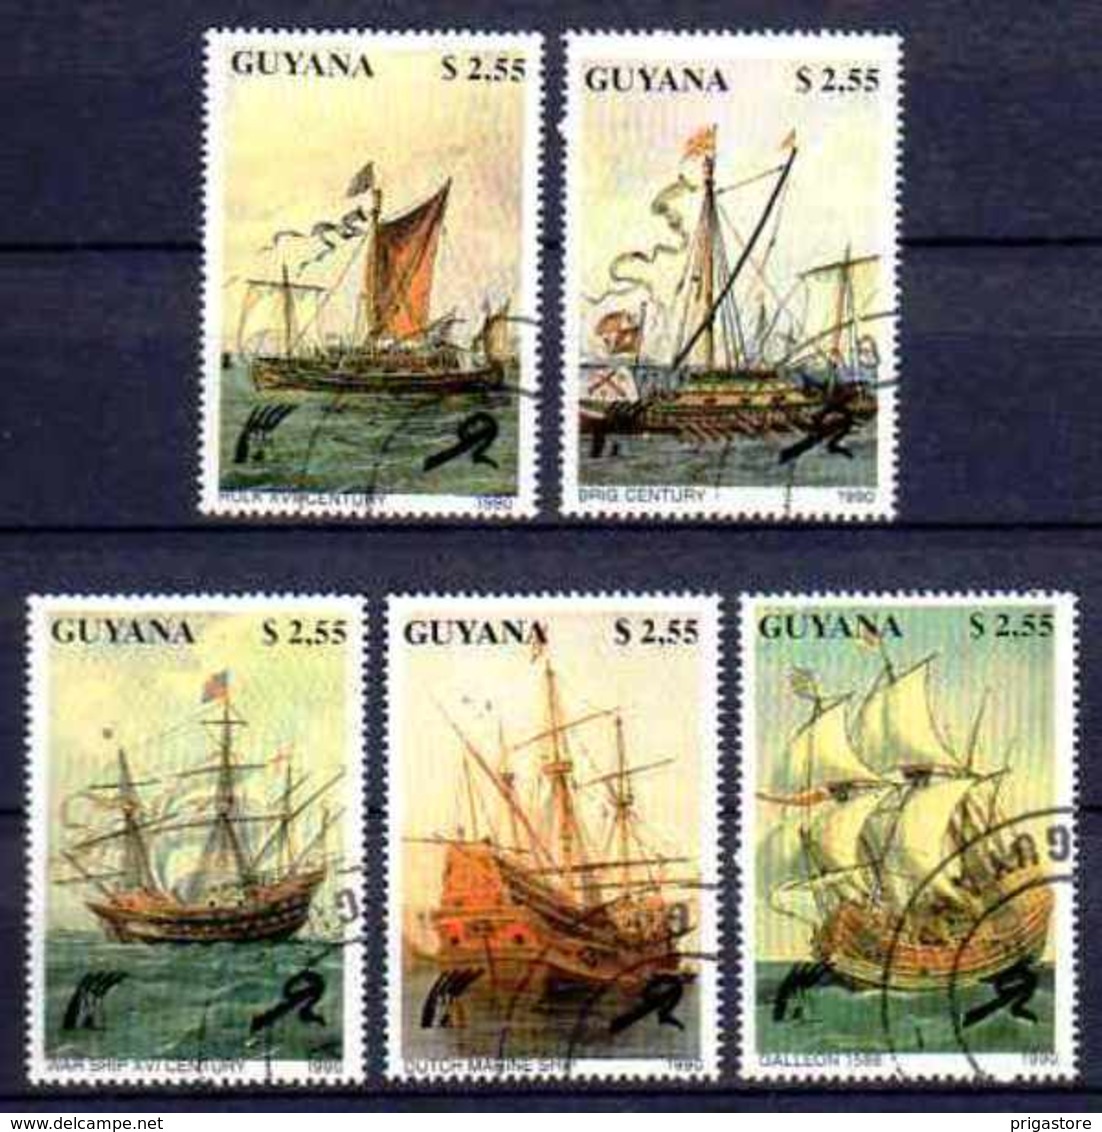 GUYANA BATEAUX 1990 (33) N° Yvert 2359 à 2363 Oblitérés Used - Guyana (1966-...)